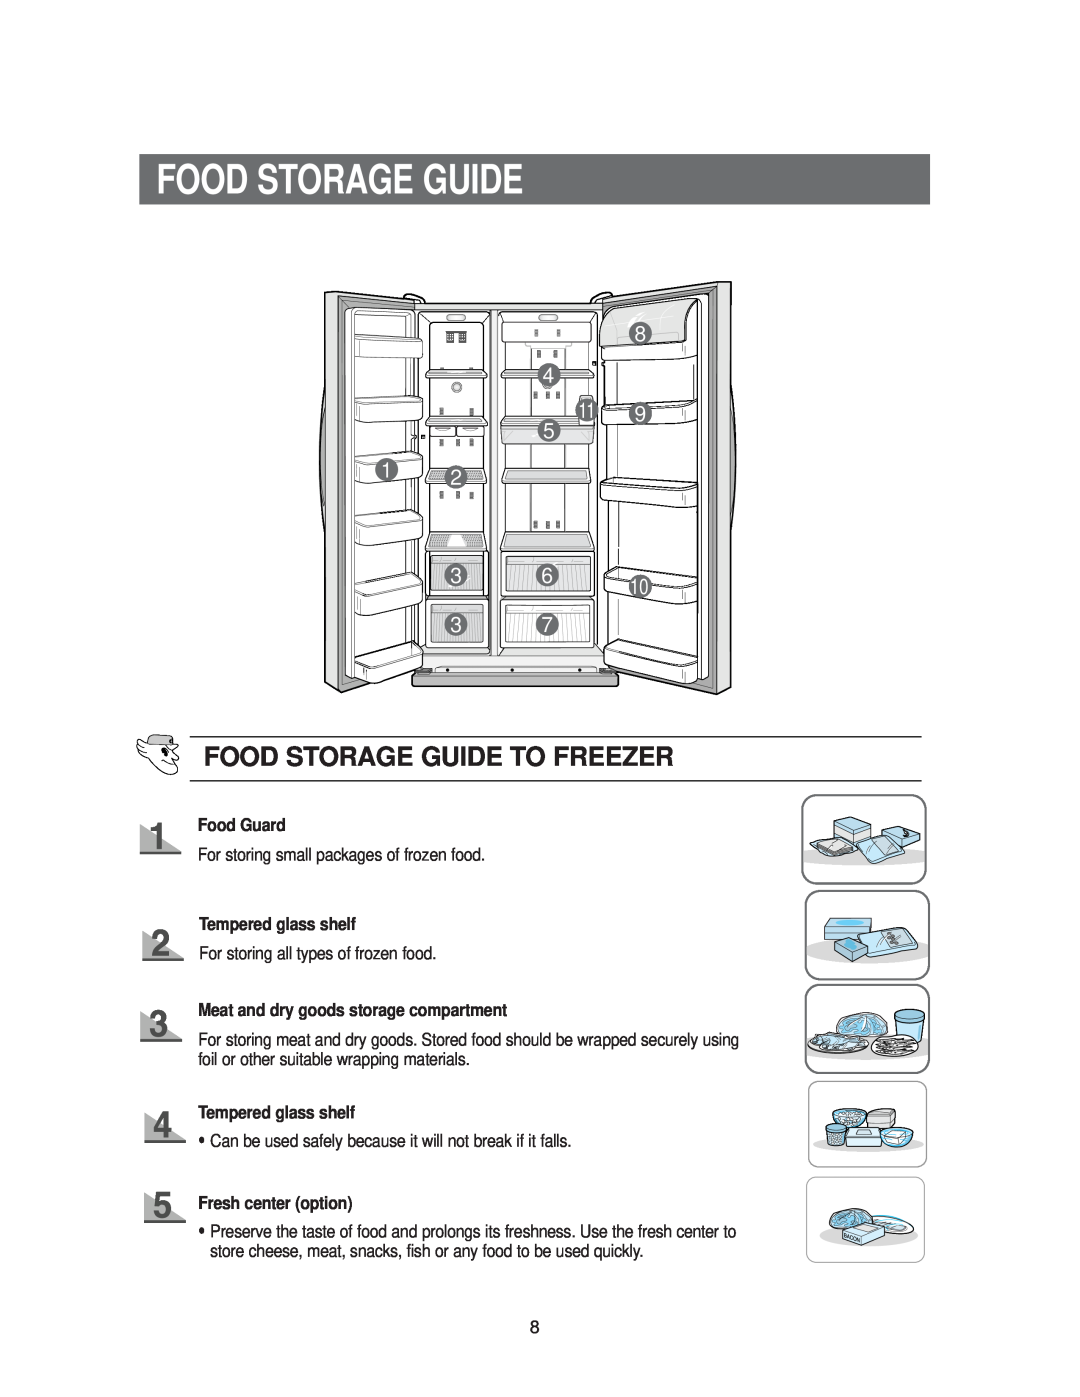 Samsung RS20**** Food Storage Guide To Freezer, Food Guard, Tempered glass shelf, Fresh center option, 8 4 11 5 1 36 